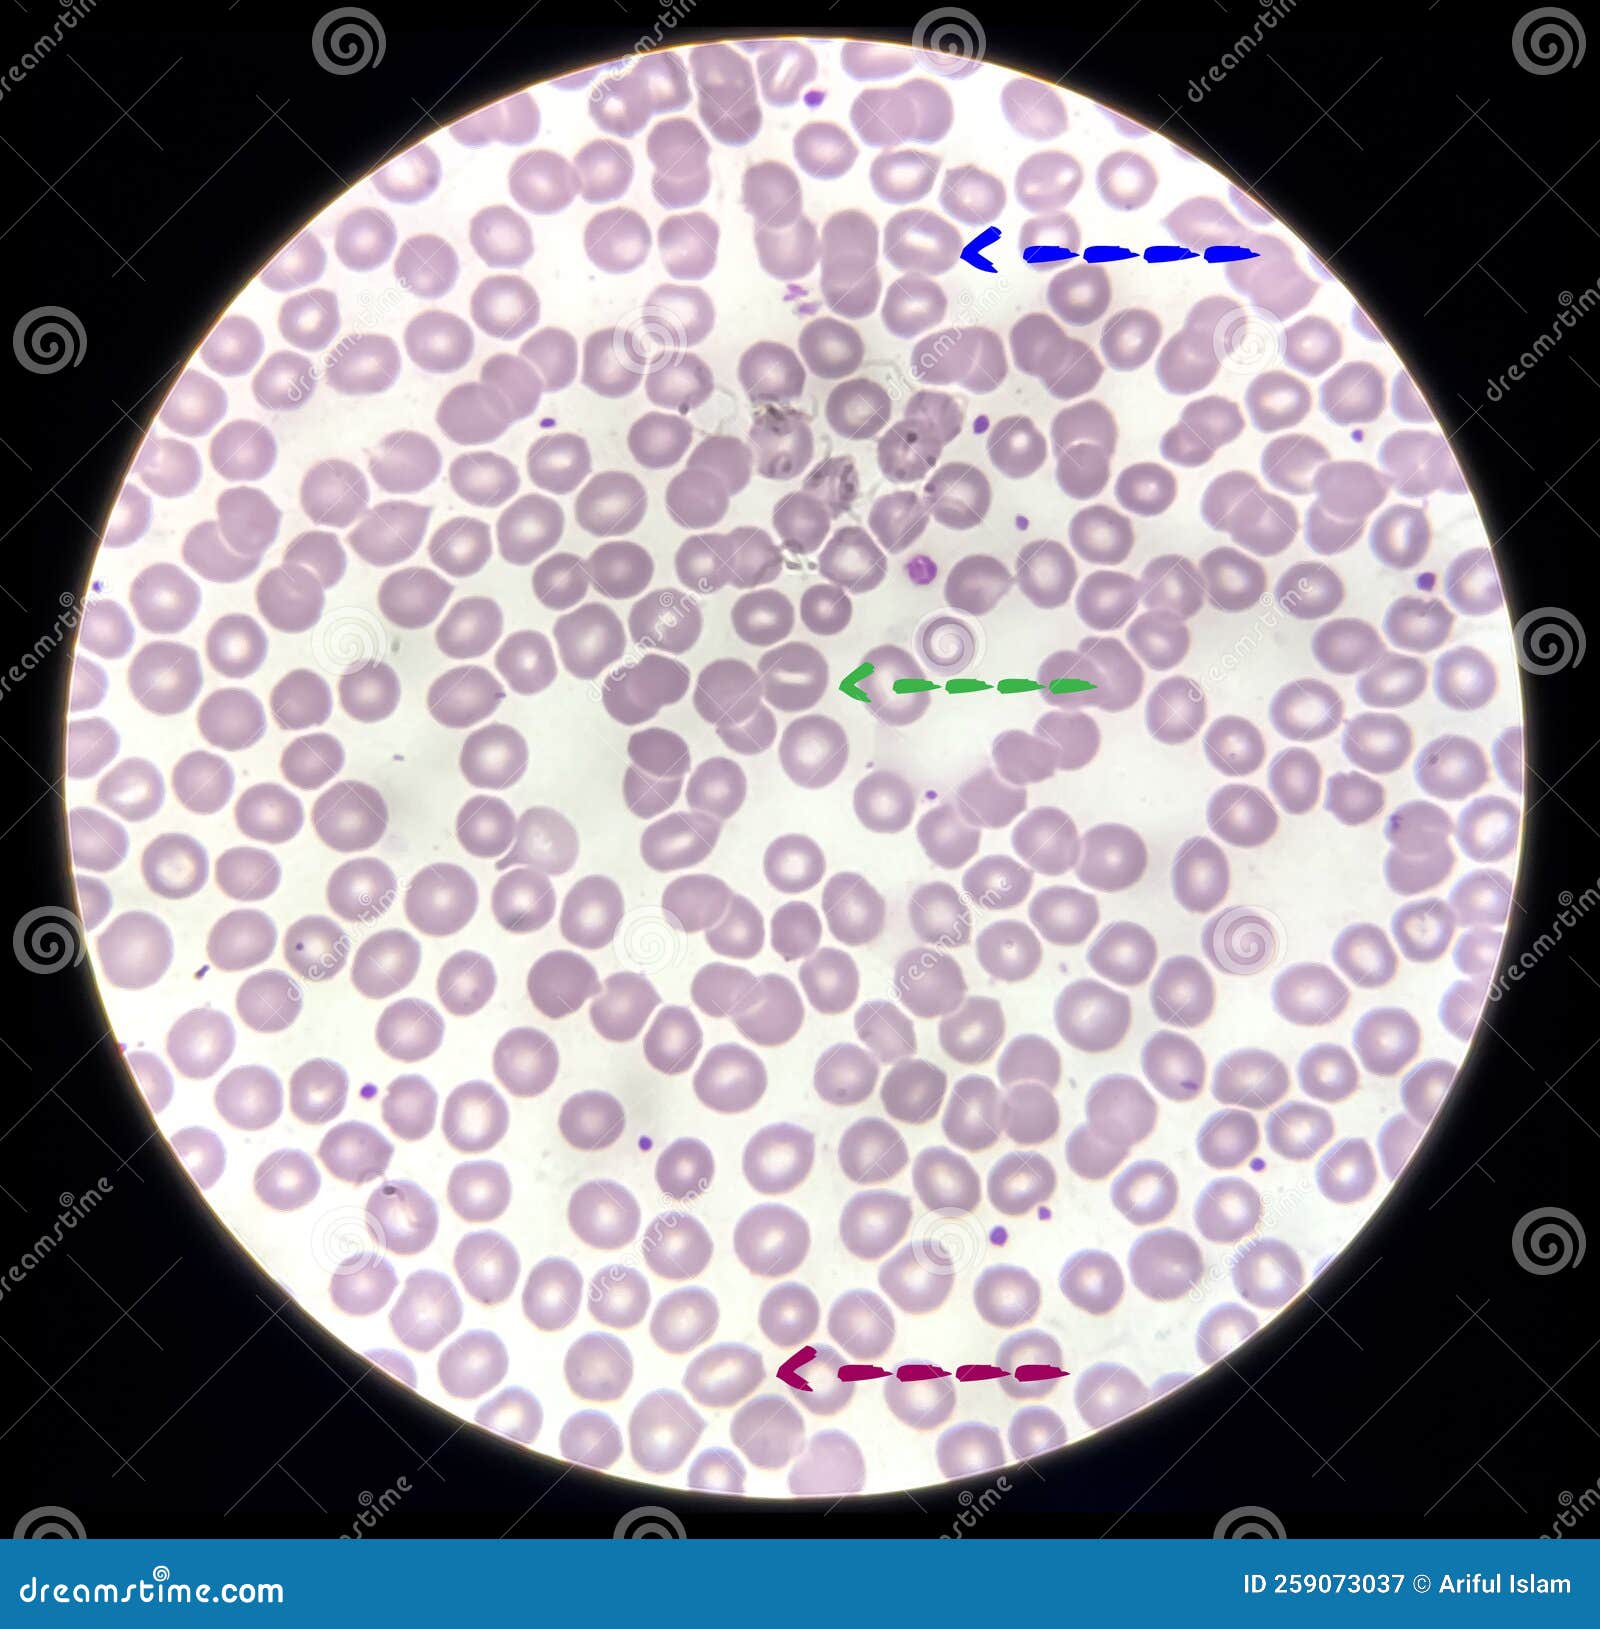 blood film microscopic show decrease platelets leucocyte (wbc).